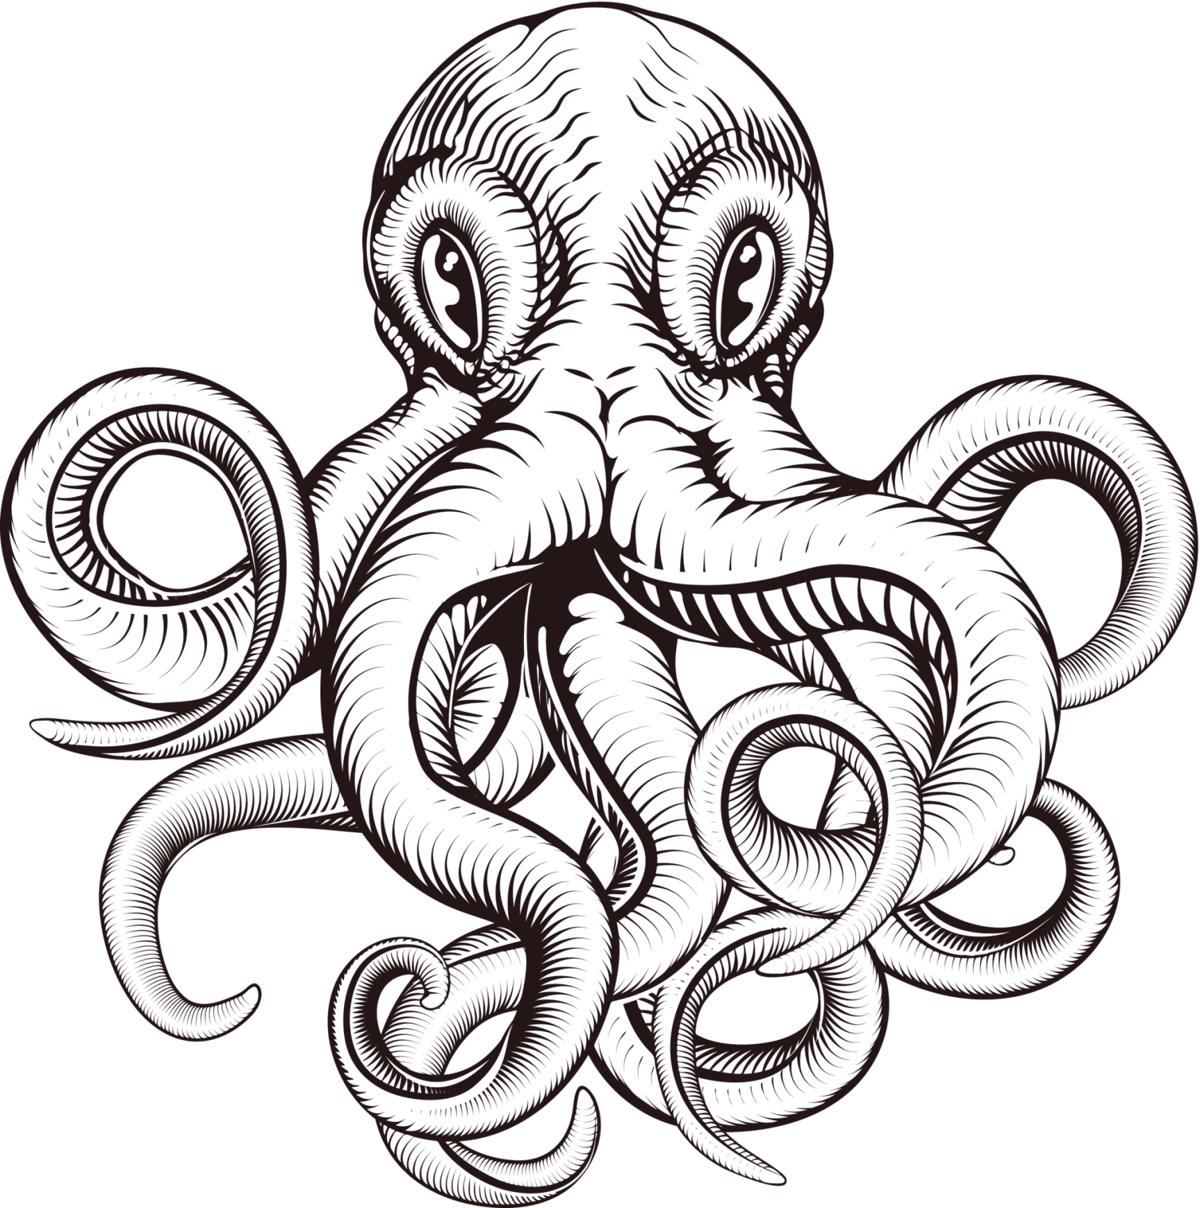 An Amazing Grey Ink Octopus Tattoo Design